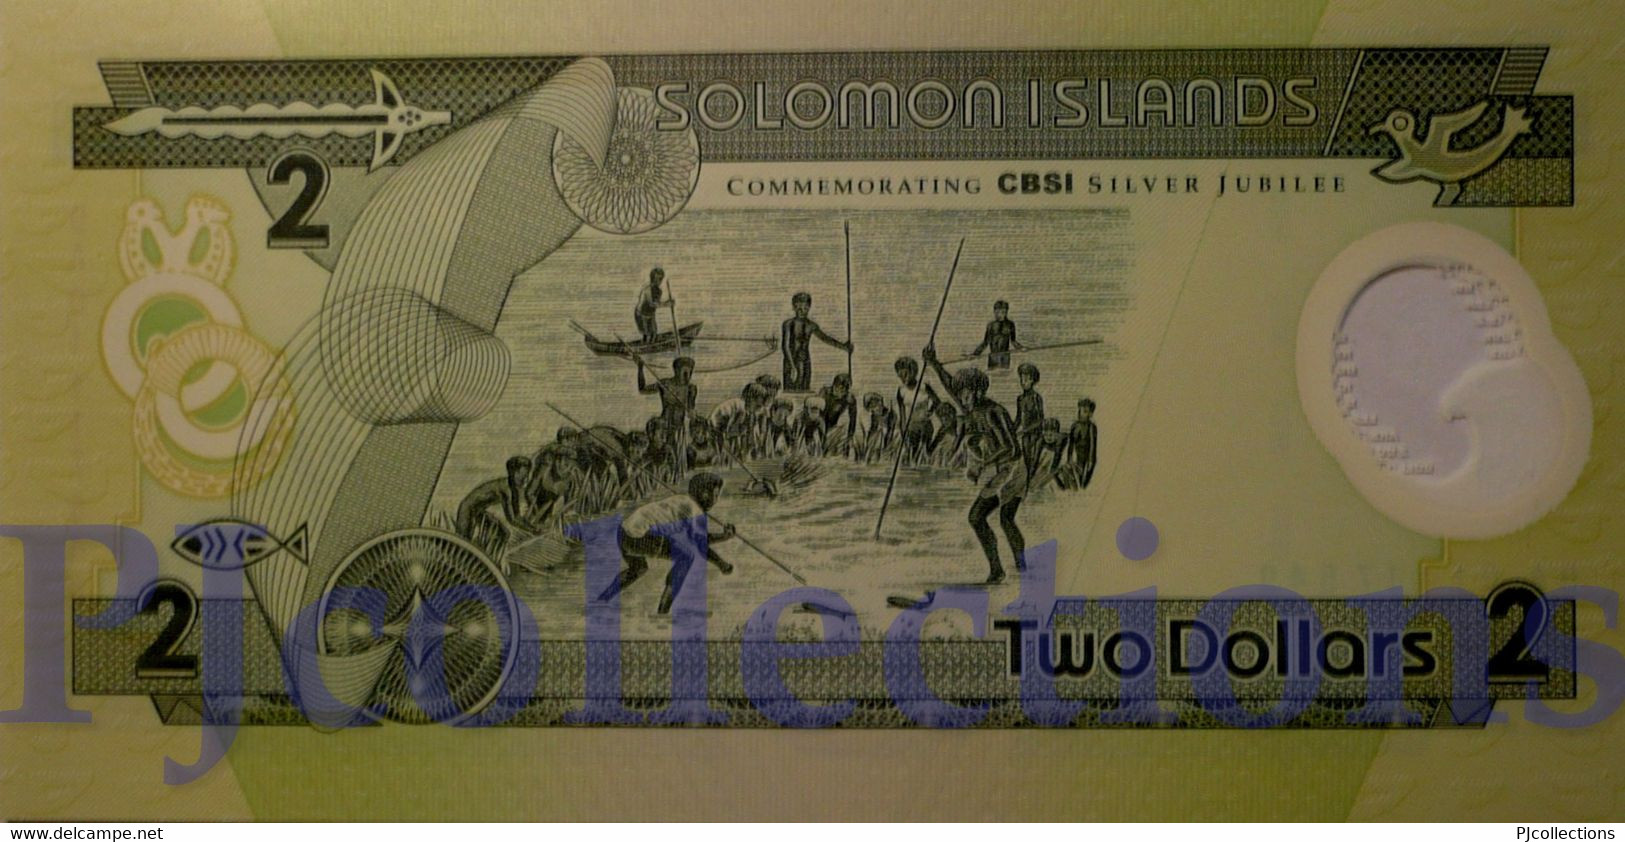 SOLOMON ISLANDS 2 DOLLARS 2001 PICK 23 POLYMER UNC - Salomonseilanden